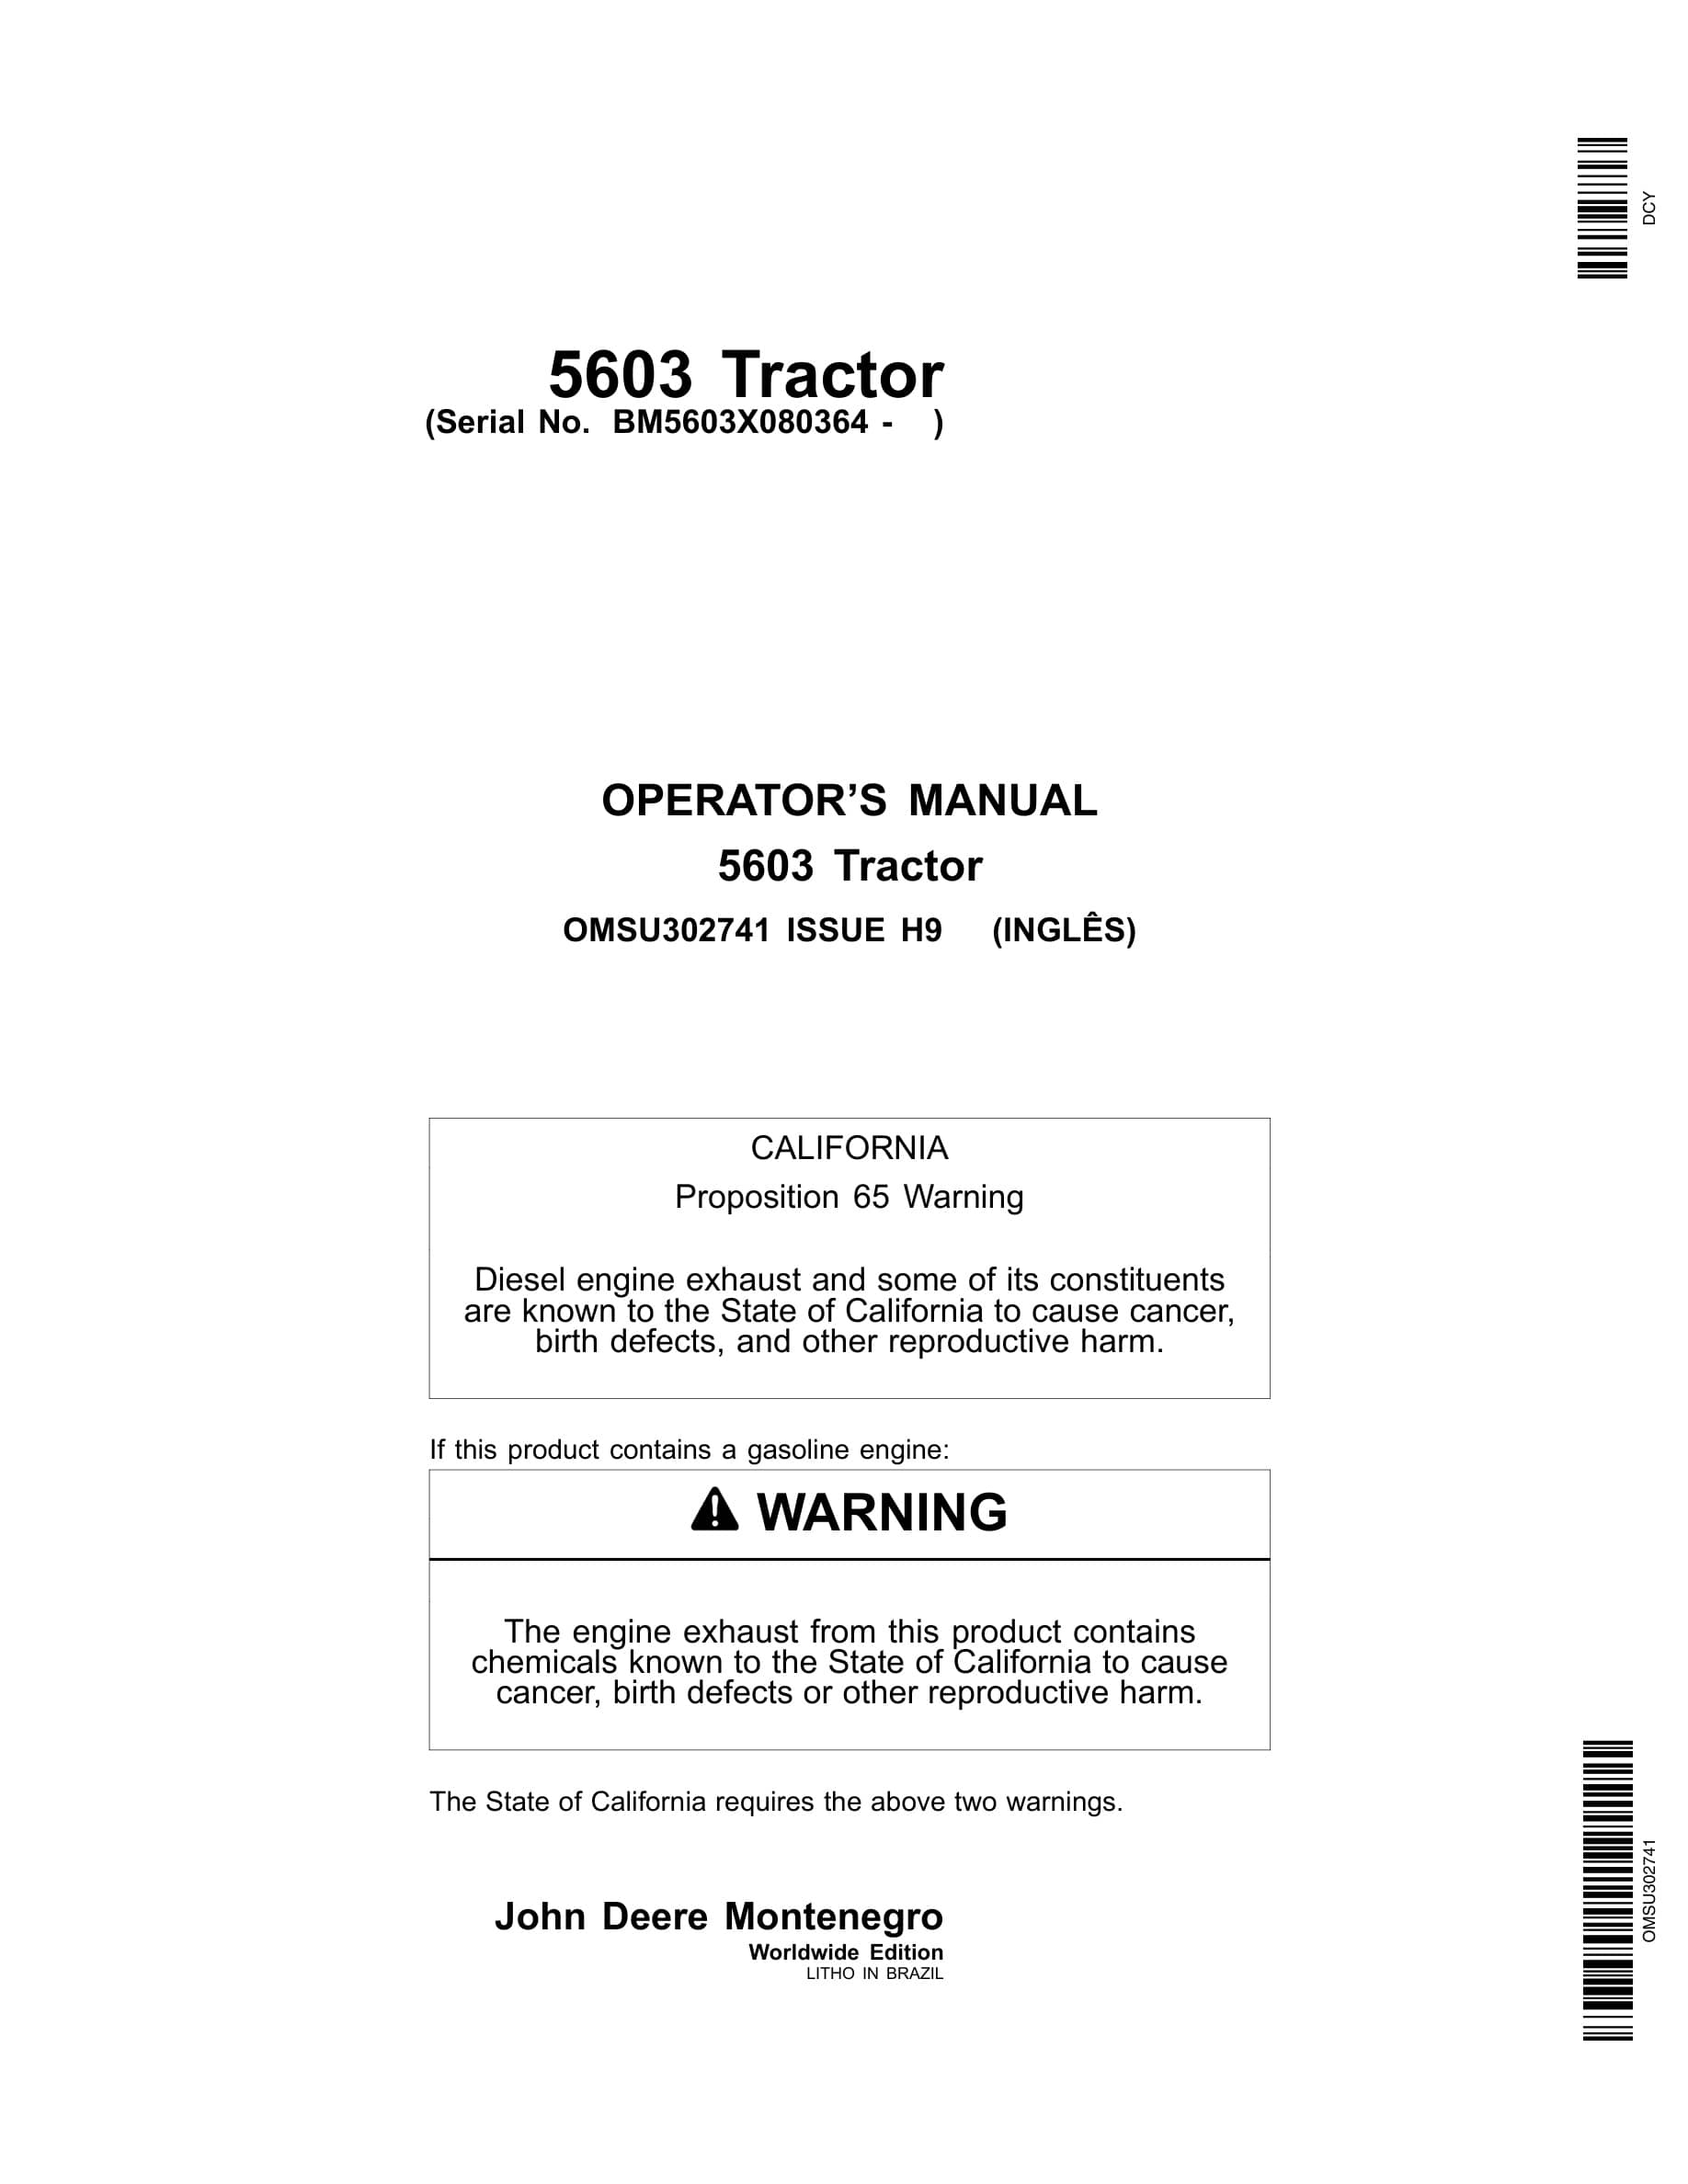 John Deere 5603 Tractors Operator Manual OMSU302741-1